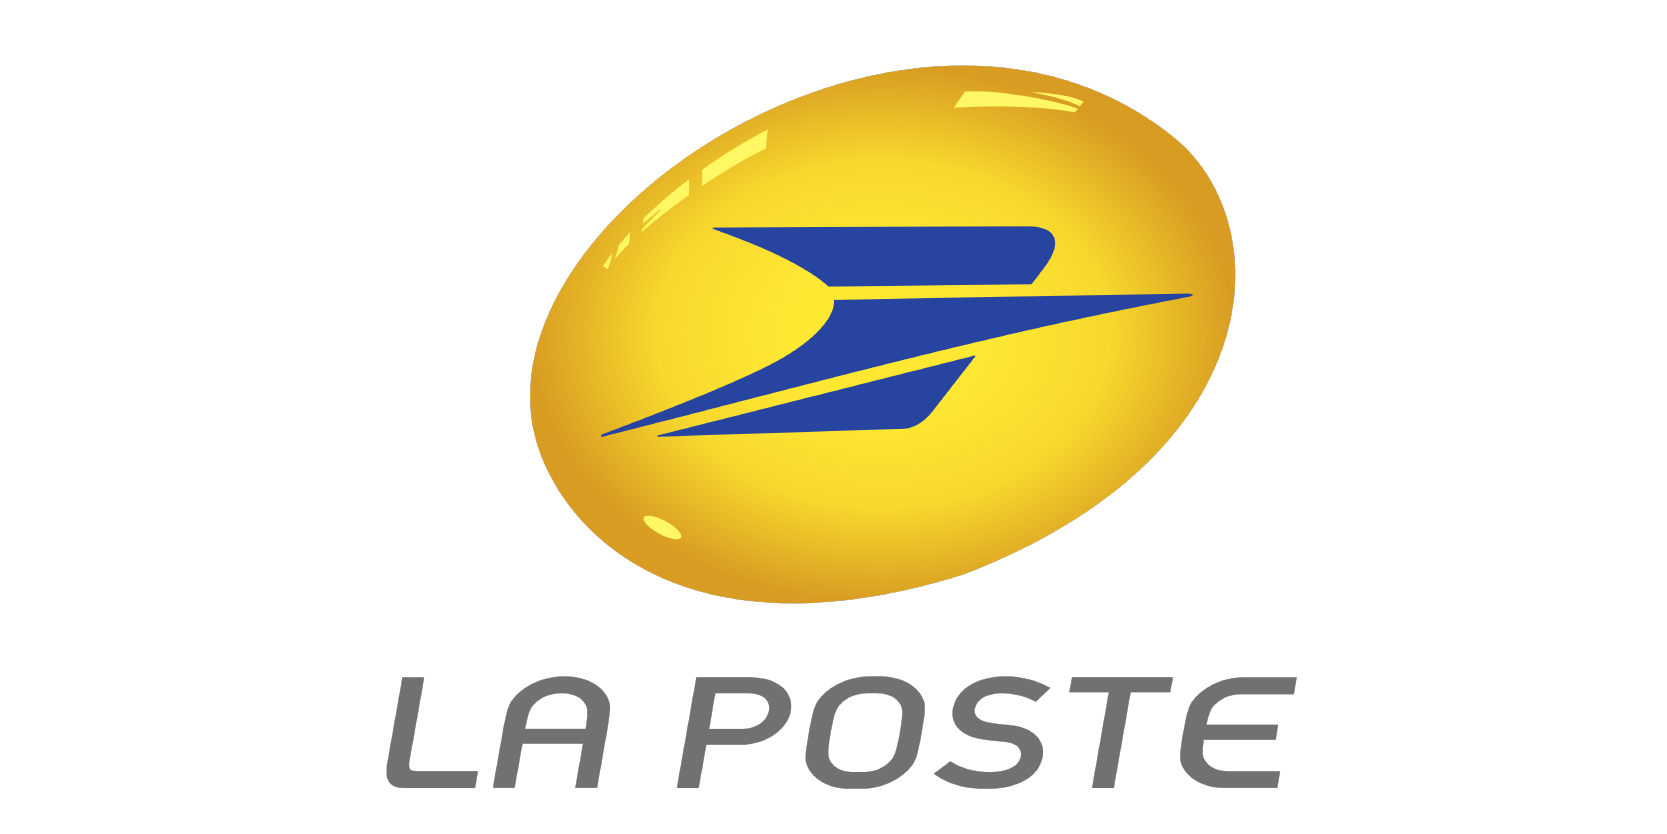 La Poste Logo